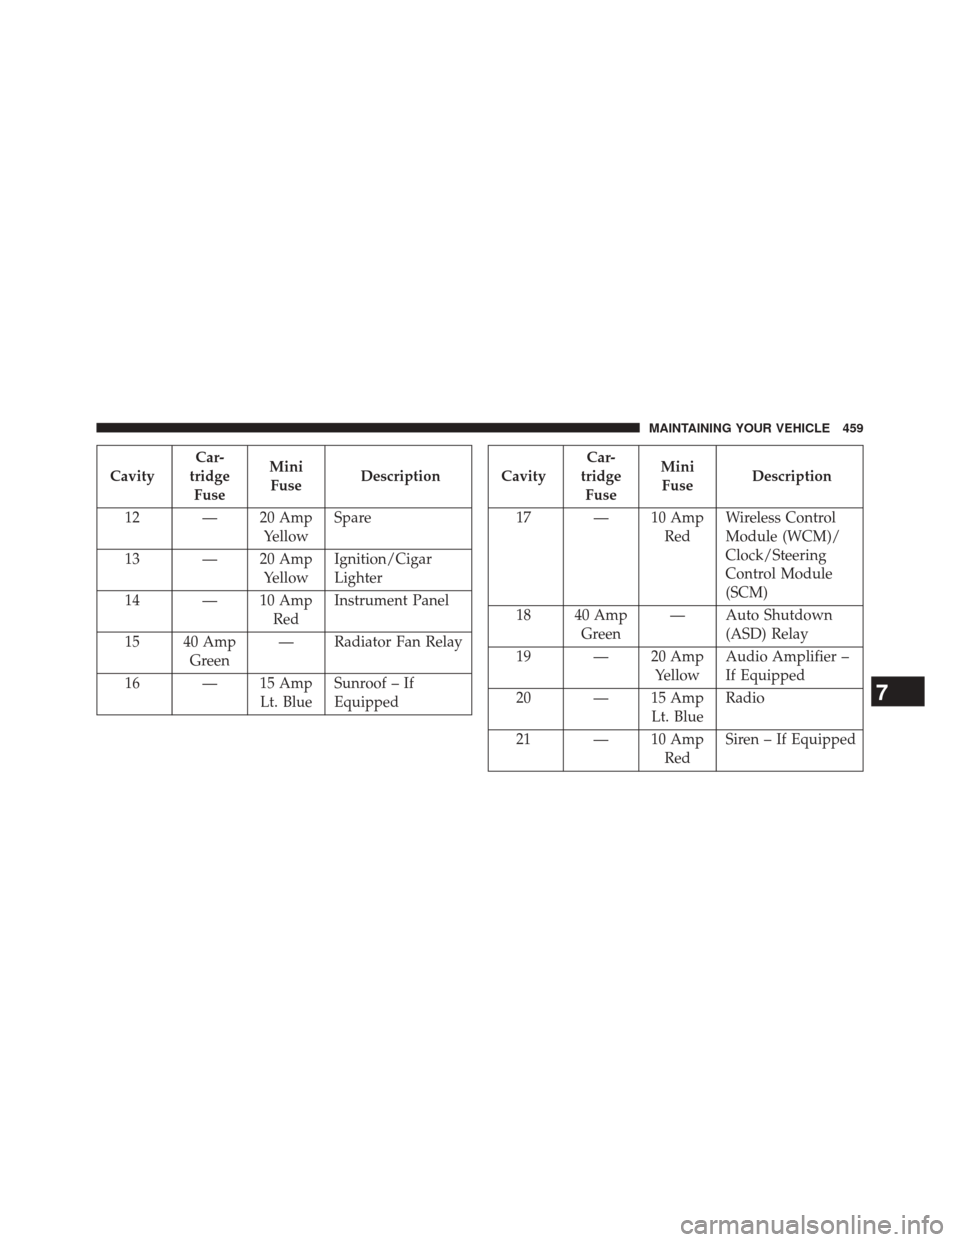 CHRYSLER 200 2014 1.G Owners Manual CavityCar-
tridge Fuse Mini
Fuse Description
12 — 20 Amp YellowSpare
13 — 20 Amp YellowIgnition/Cigar
Lighter
14 — 10 Amp RedInstrument Panel
15 40 Amp Green — Radiator Fan Relay
16 — 15 Amp